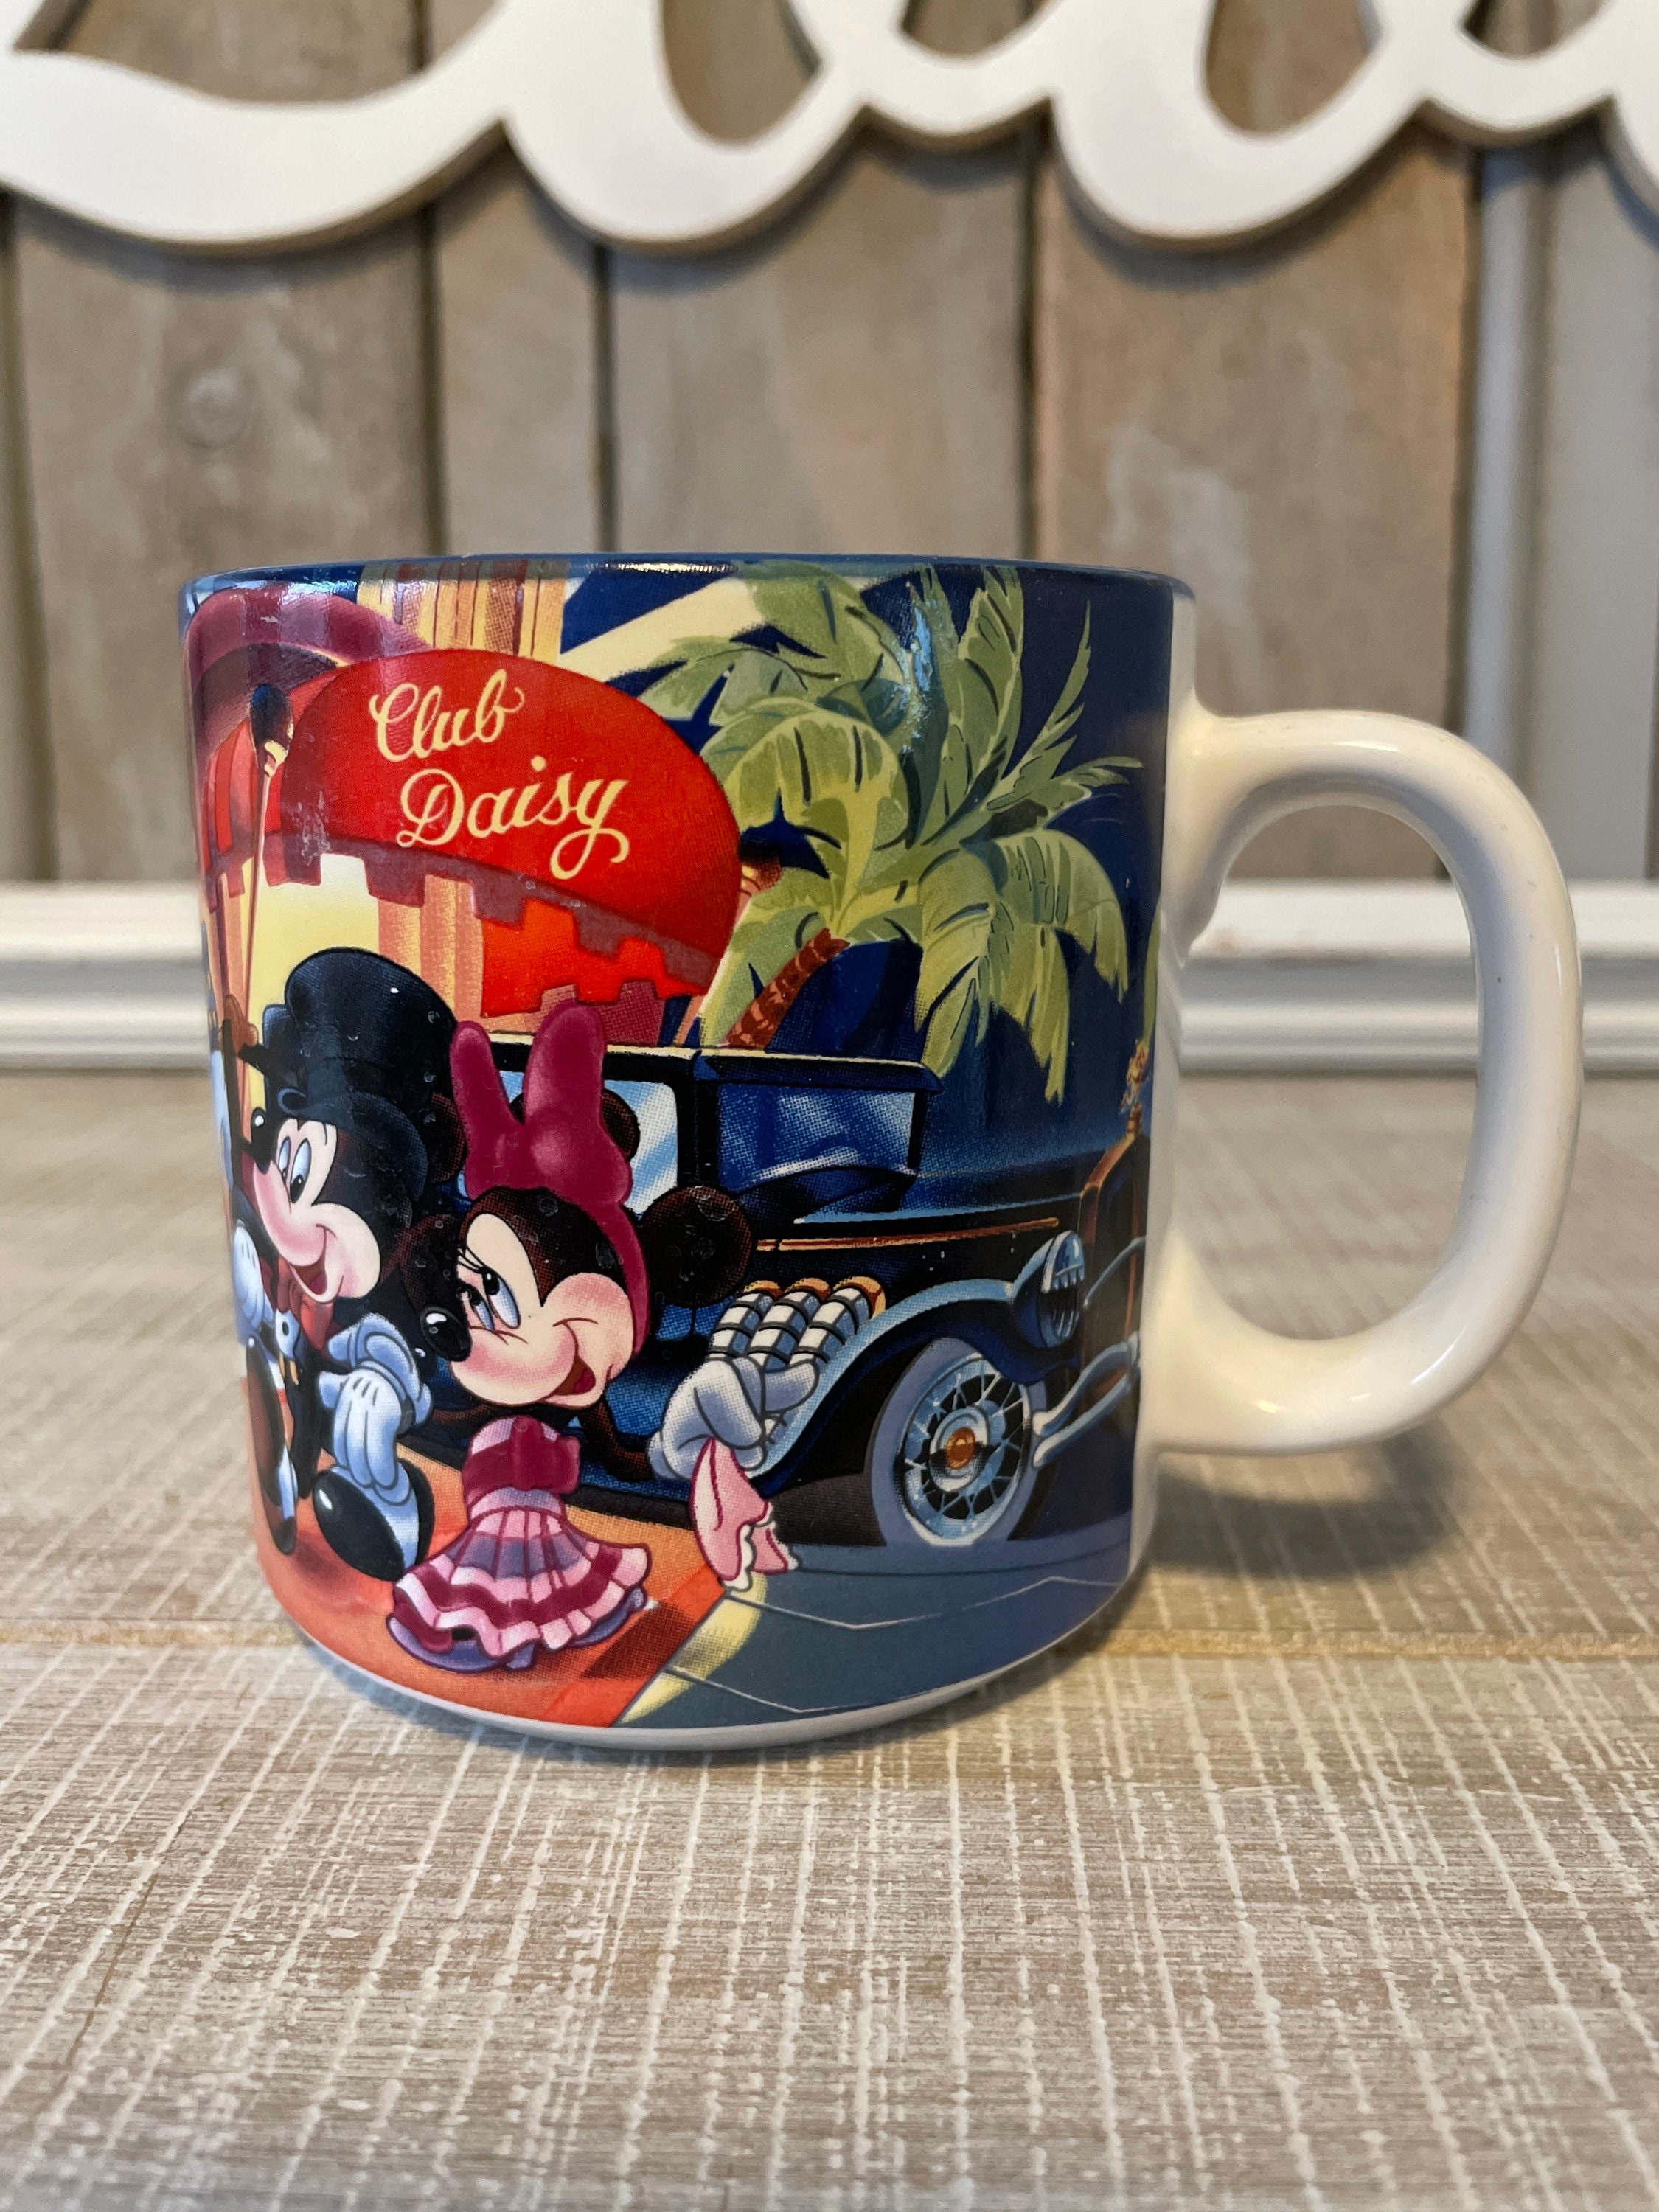 Disney Discovery- Mickey and Minnie Season's Greetings Mug